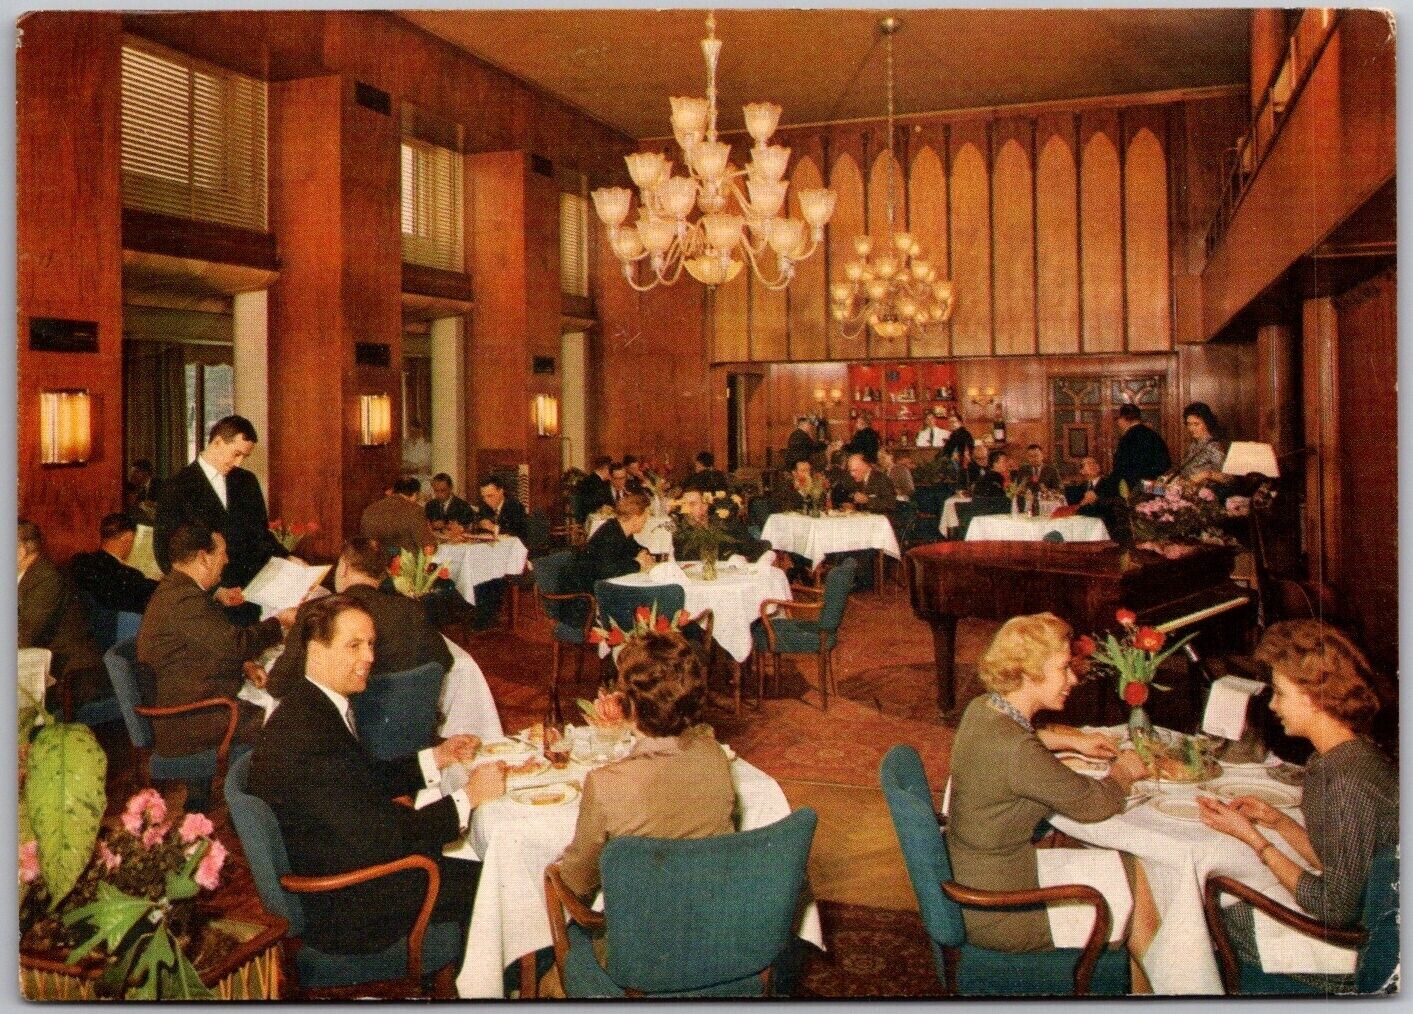 Postcard: Stadshotellet, Eskilstuna - First Class Dining Room, Scenic Scand A125